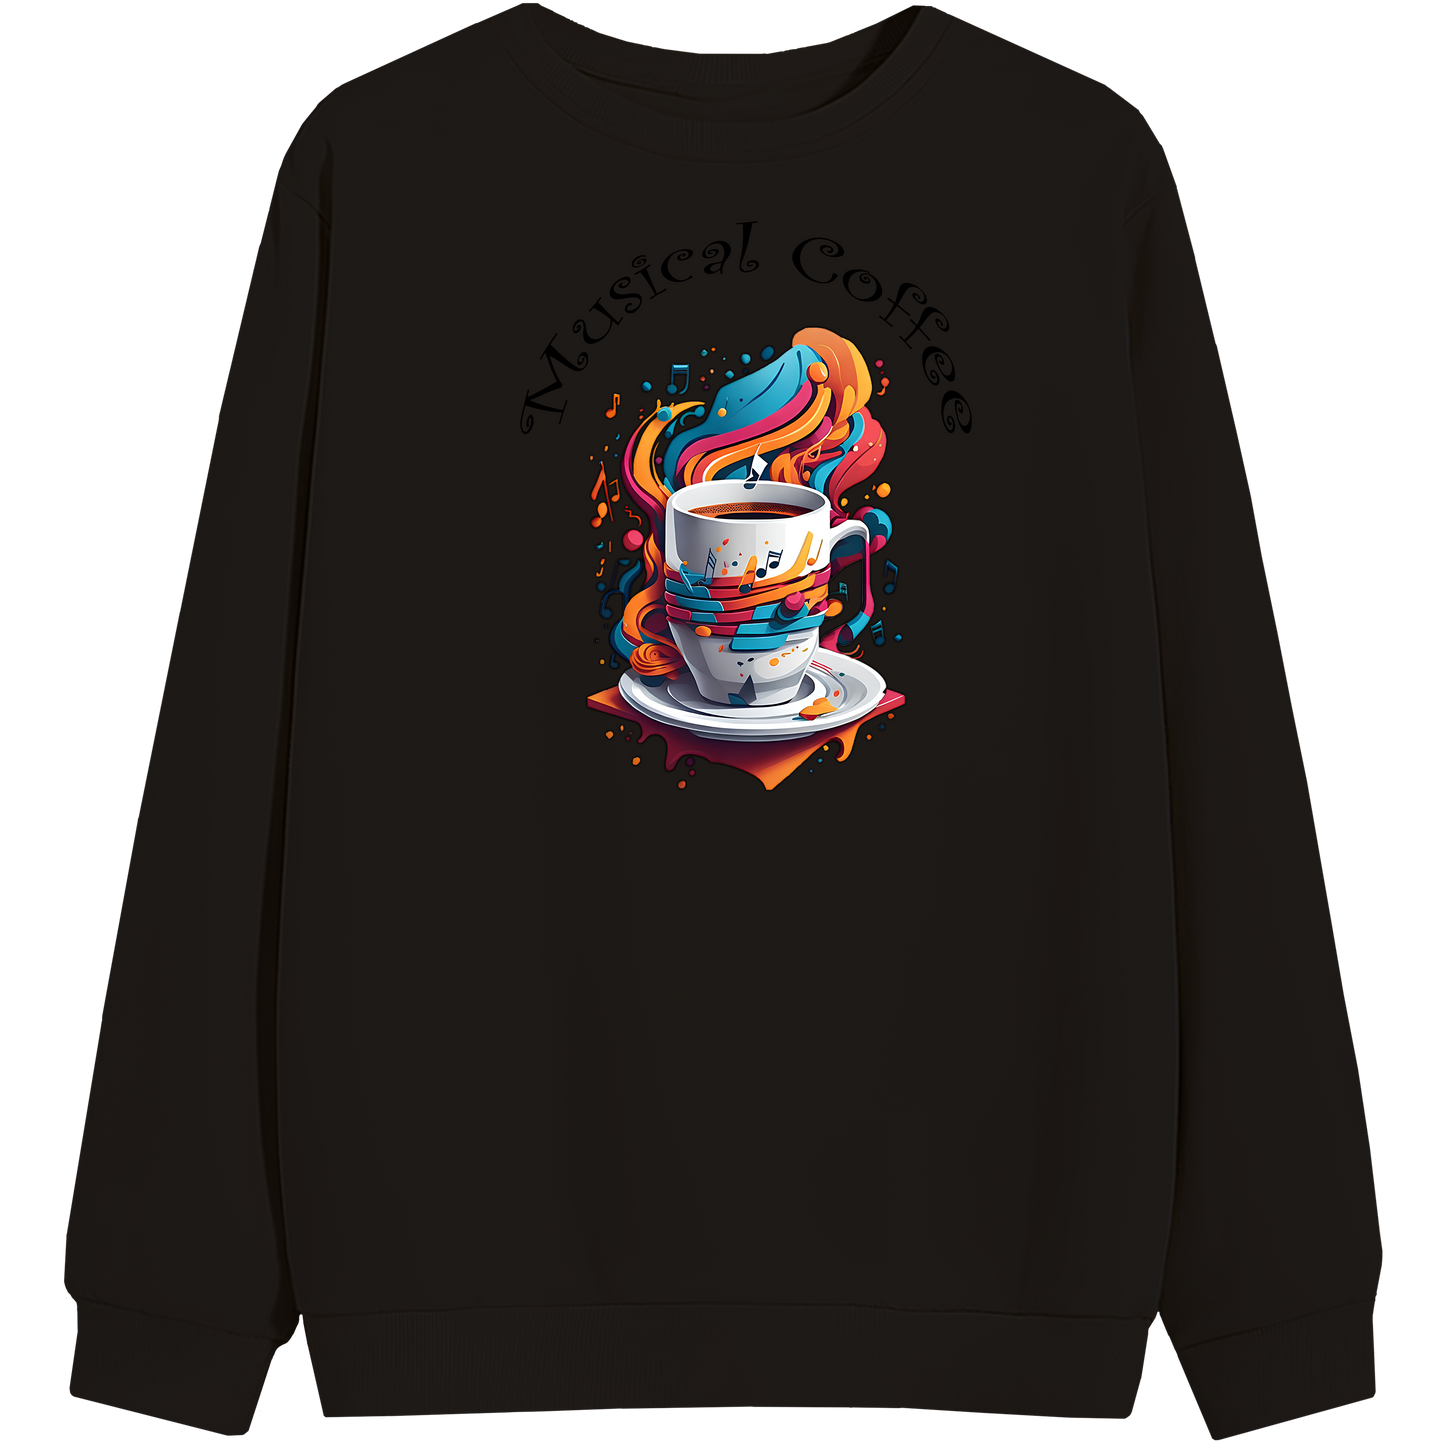 Musical Coffee - Sweatshirt